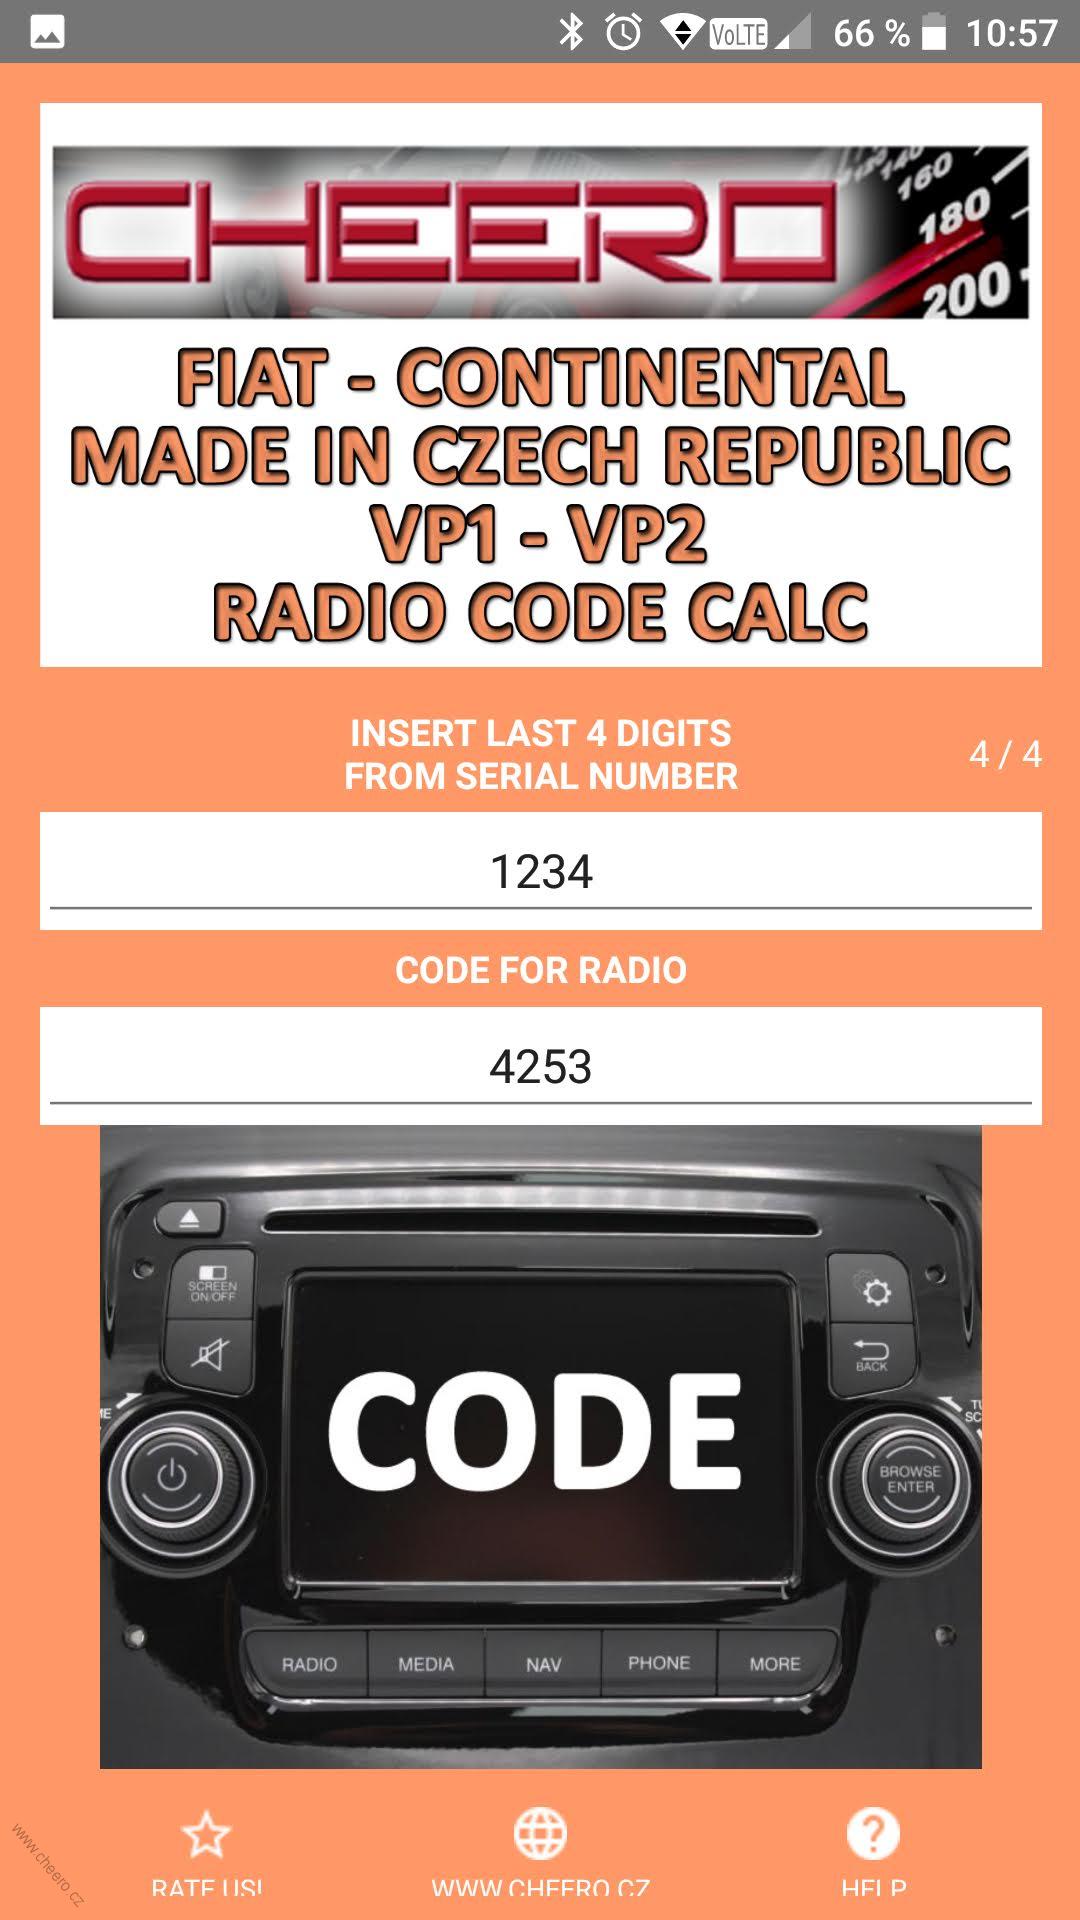 RADIO CODE FOR FIAT ALFA ROMEO CONTINENTAL VP1 VP2 CZECH